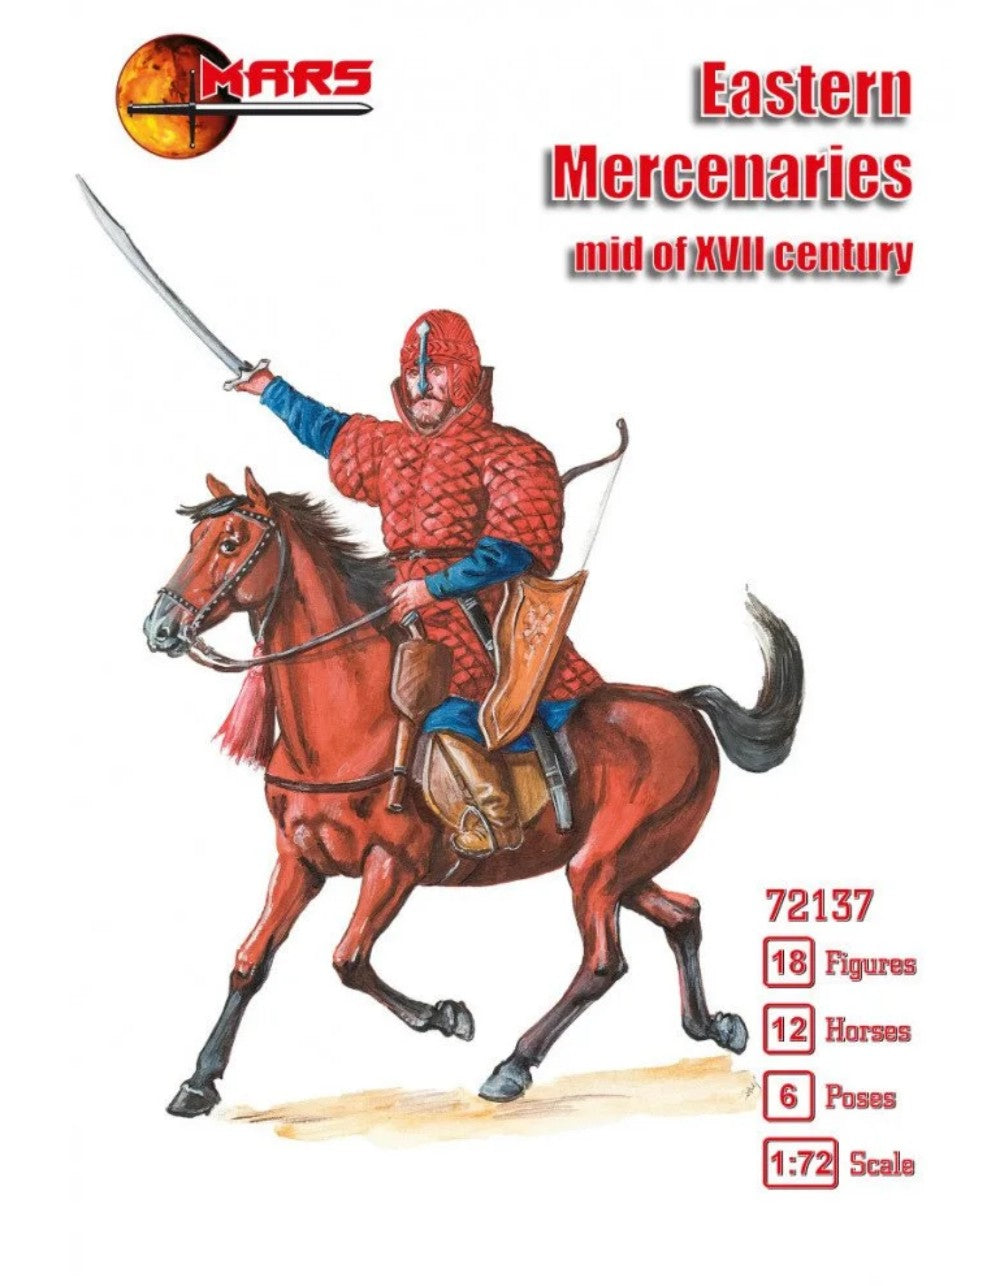 Mars Models 72137 1/72 Mid XVII Century Eastern Mercenaries (18 w/12 Horses)